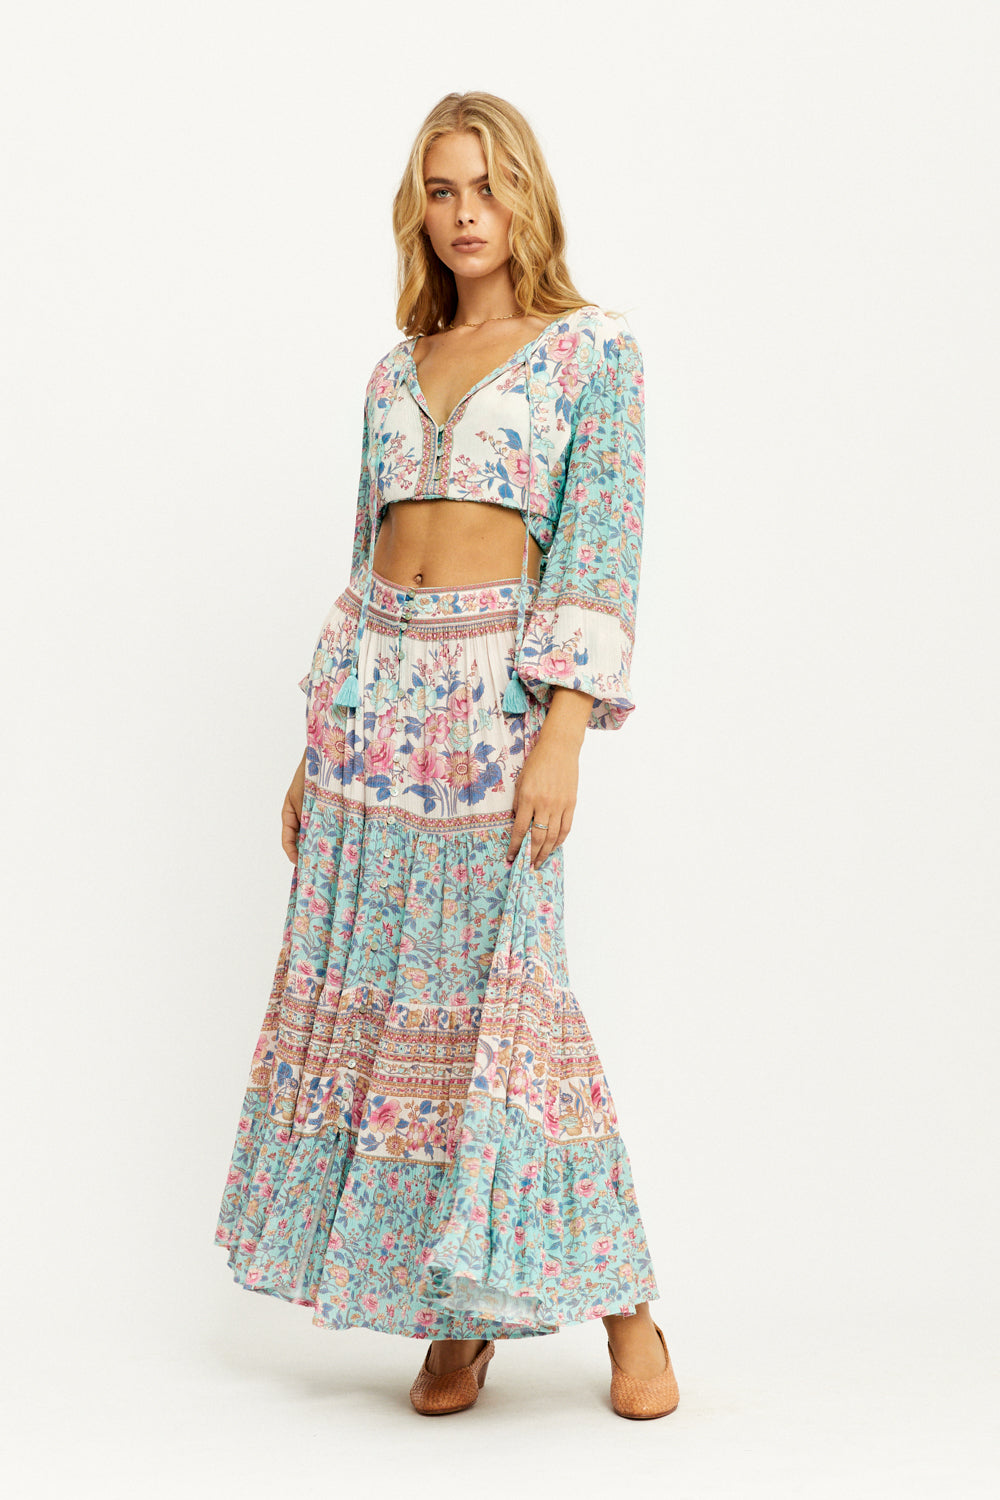 Freya Maxi Skirt in Azure – Arnhem Clothing